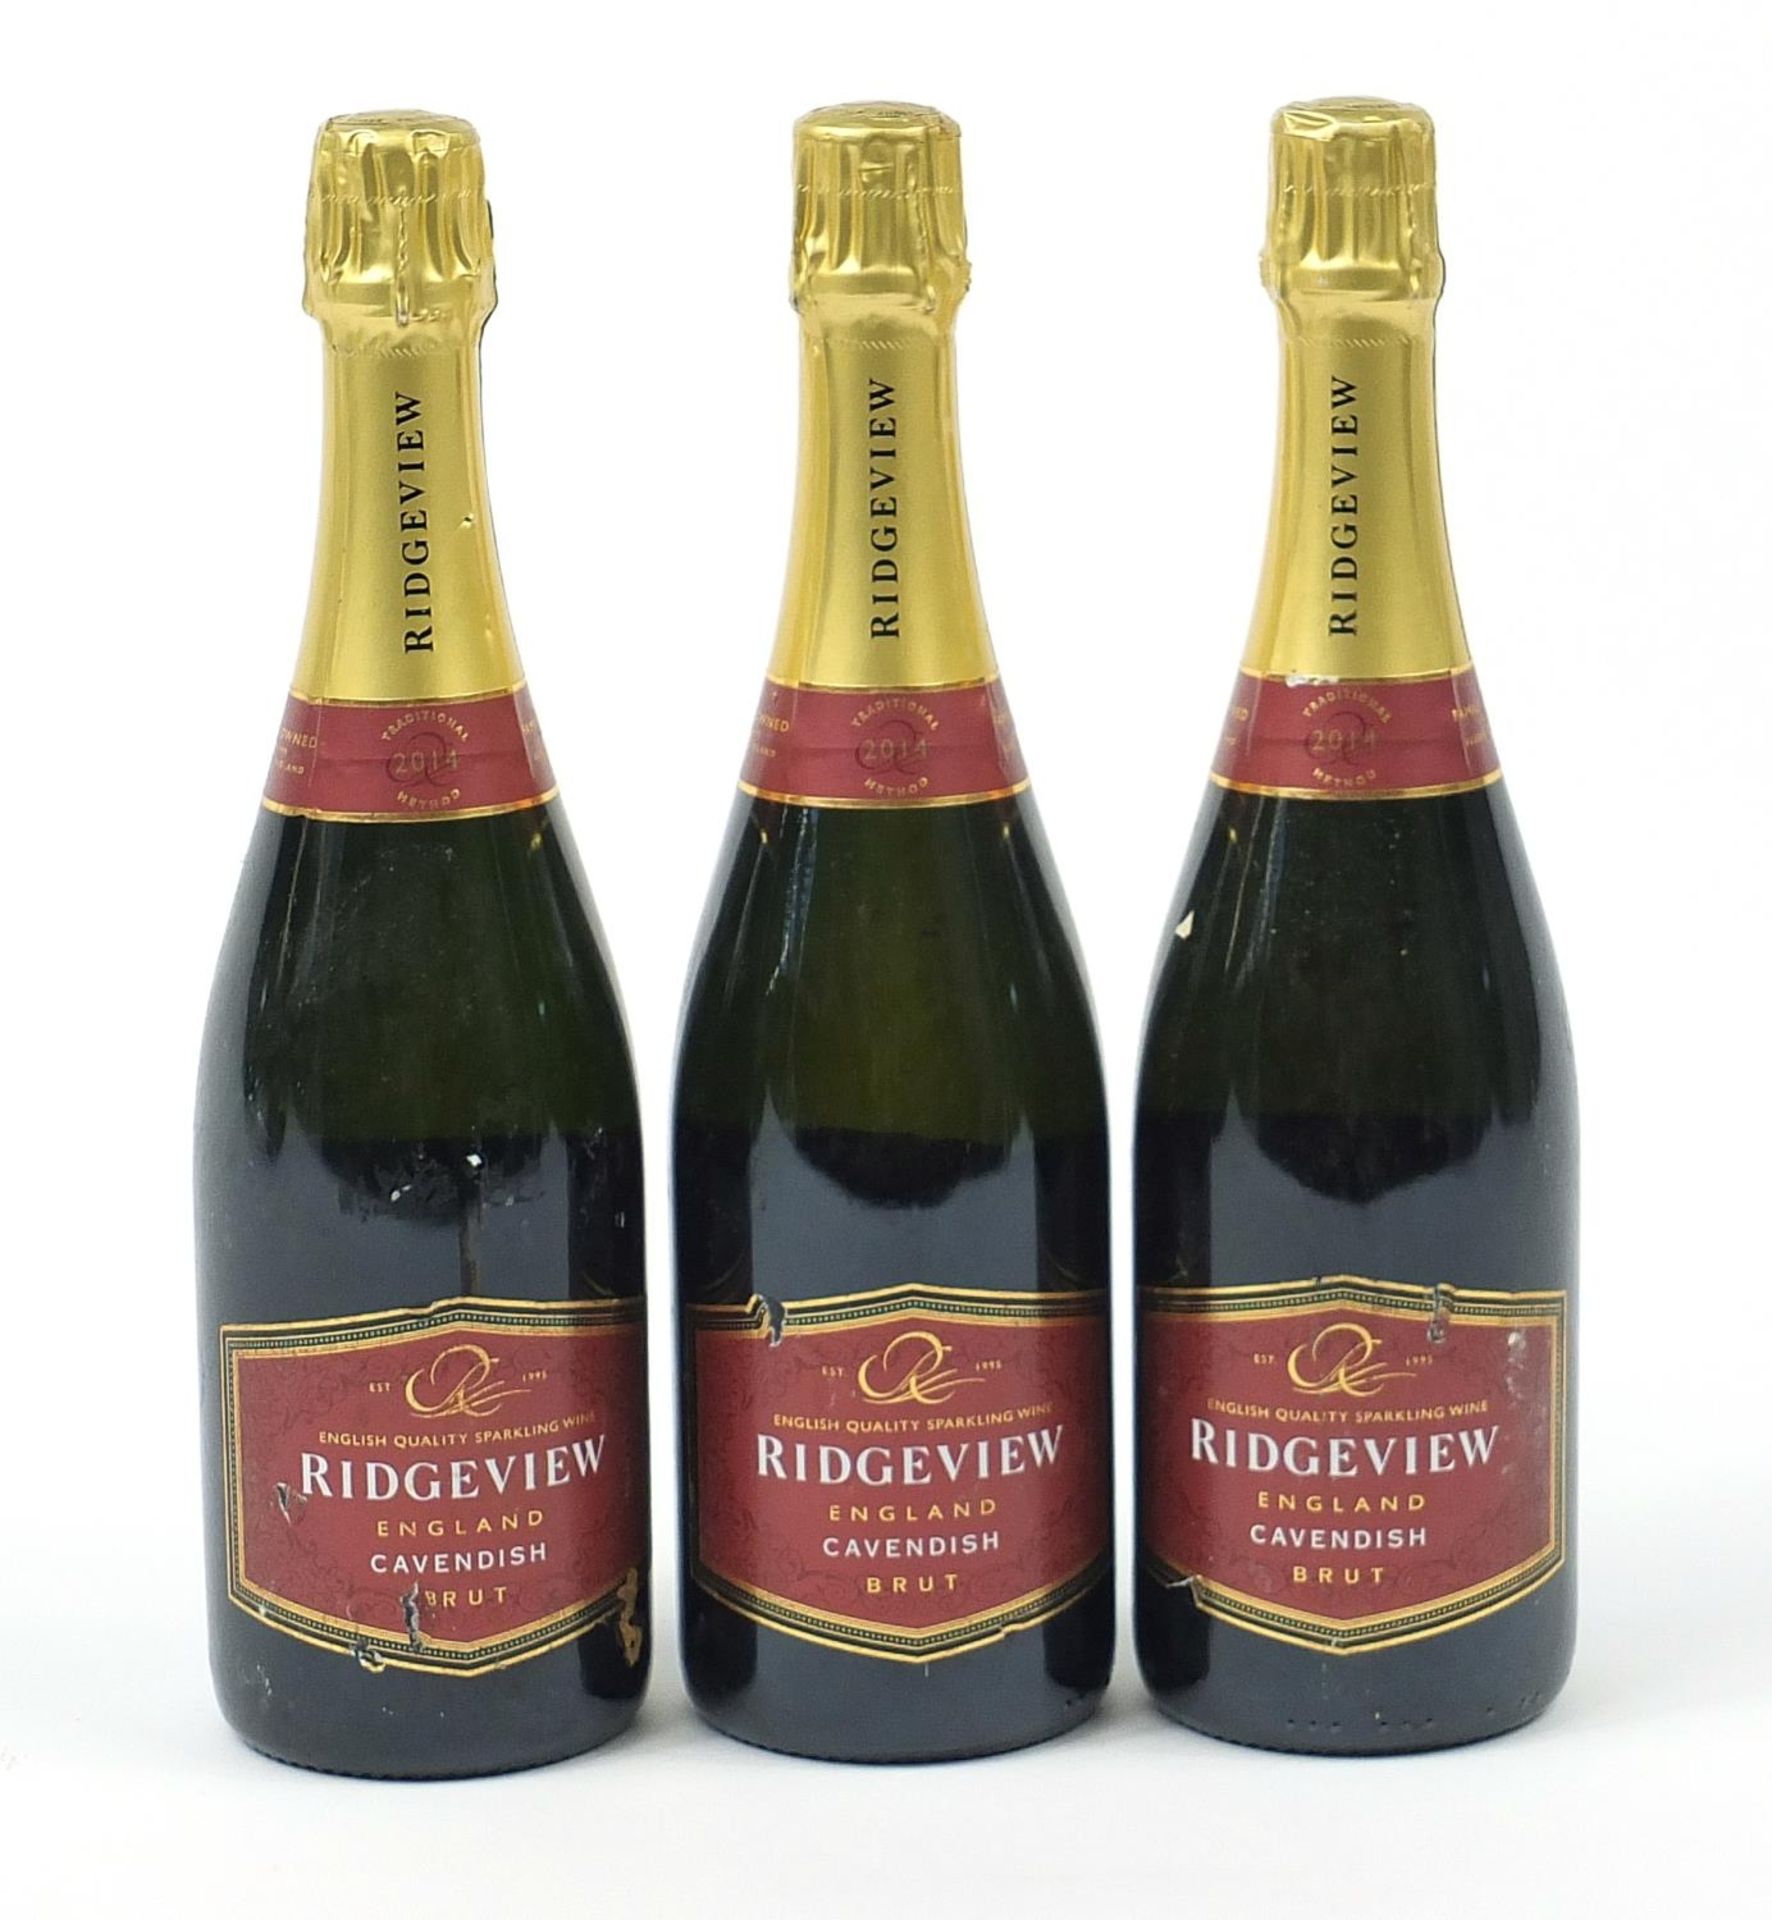 Three bottles of Ridgeview Cavendish sparkling wine